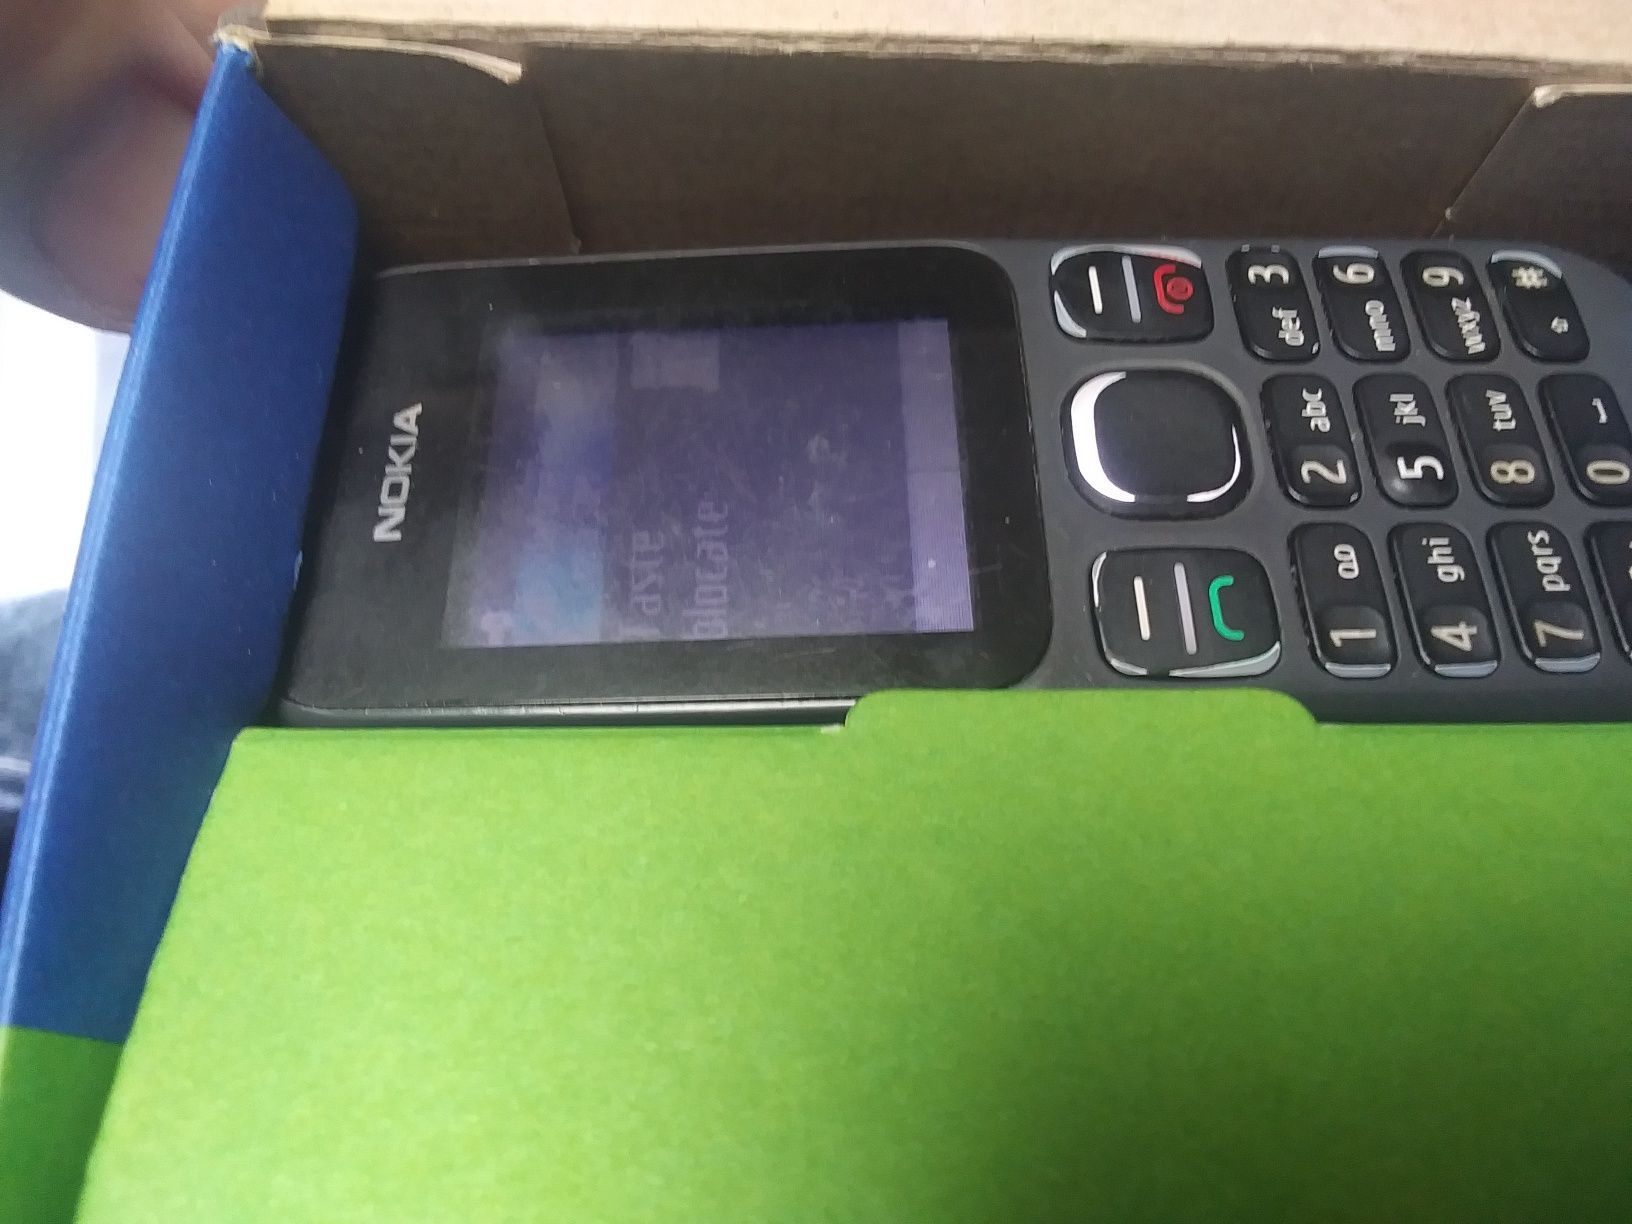 Nokia diferit model liber in retea perfect functional cu cutia